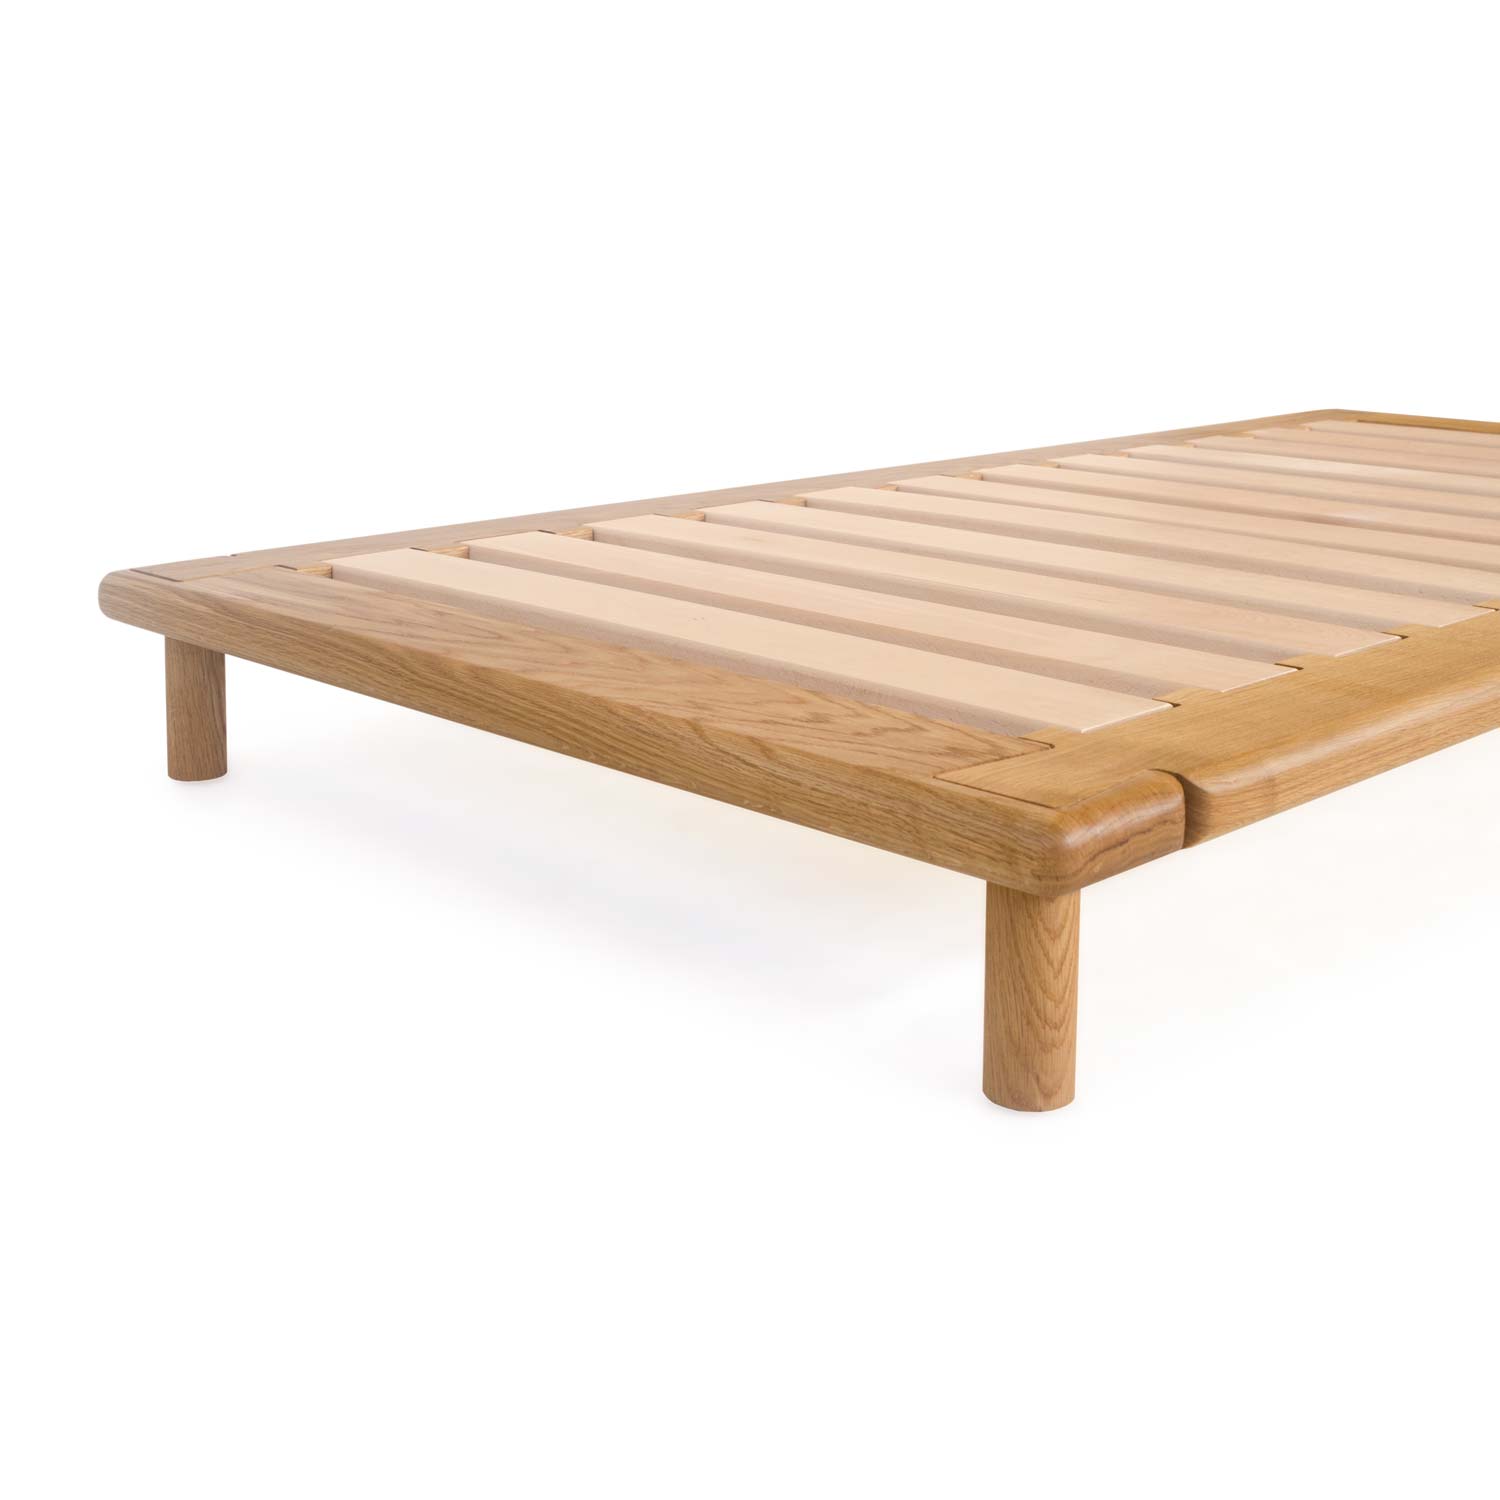 Oak Platform Bed Without A Headboard, California King Platform Bed No Headboard